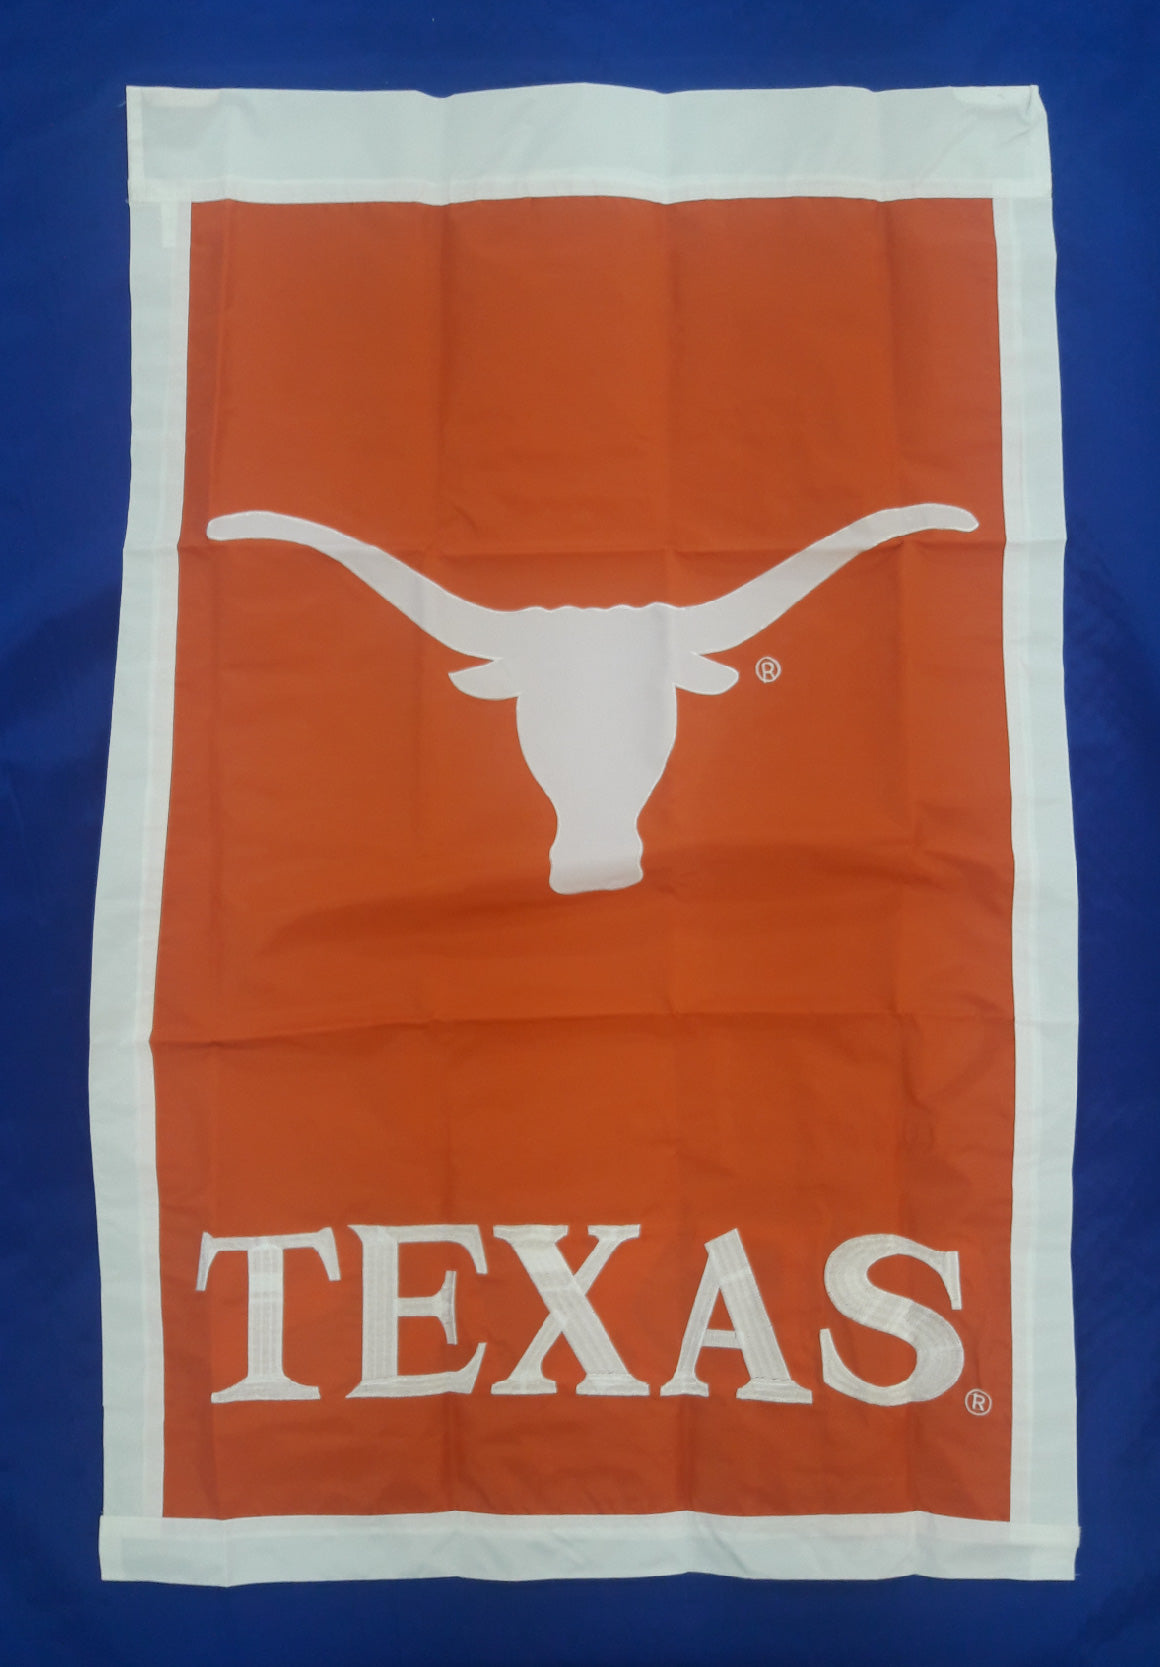 University of Texas house banner - 28